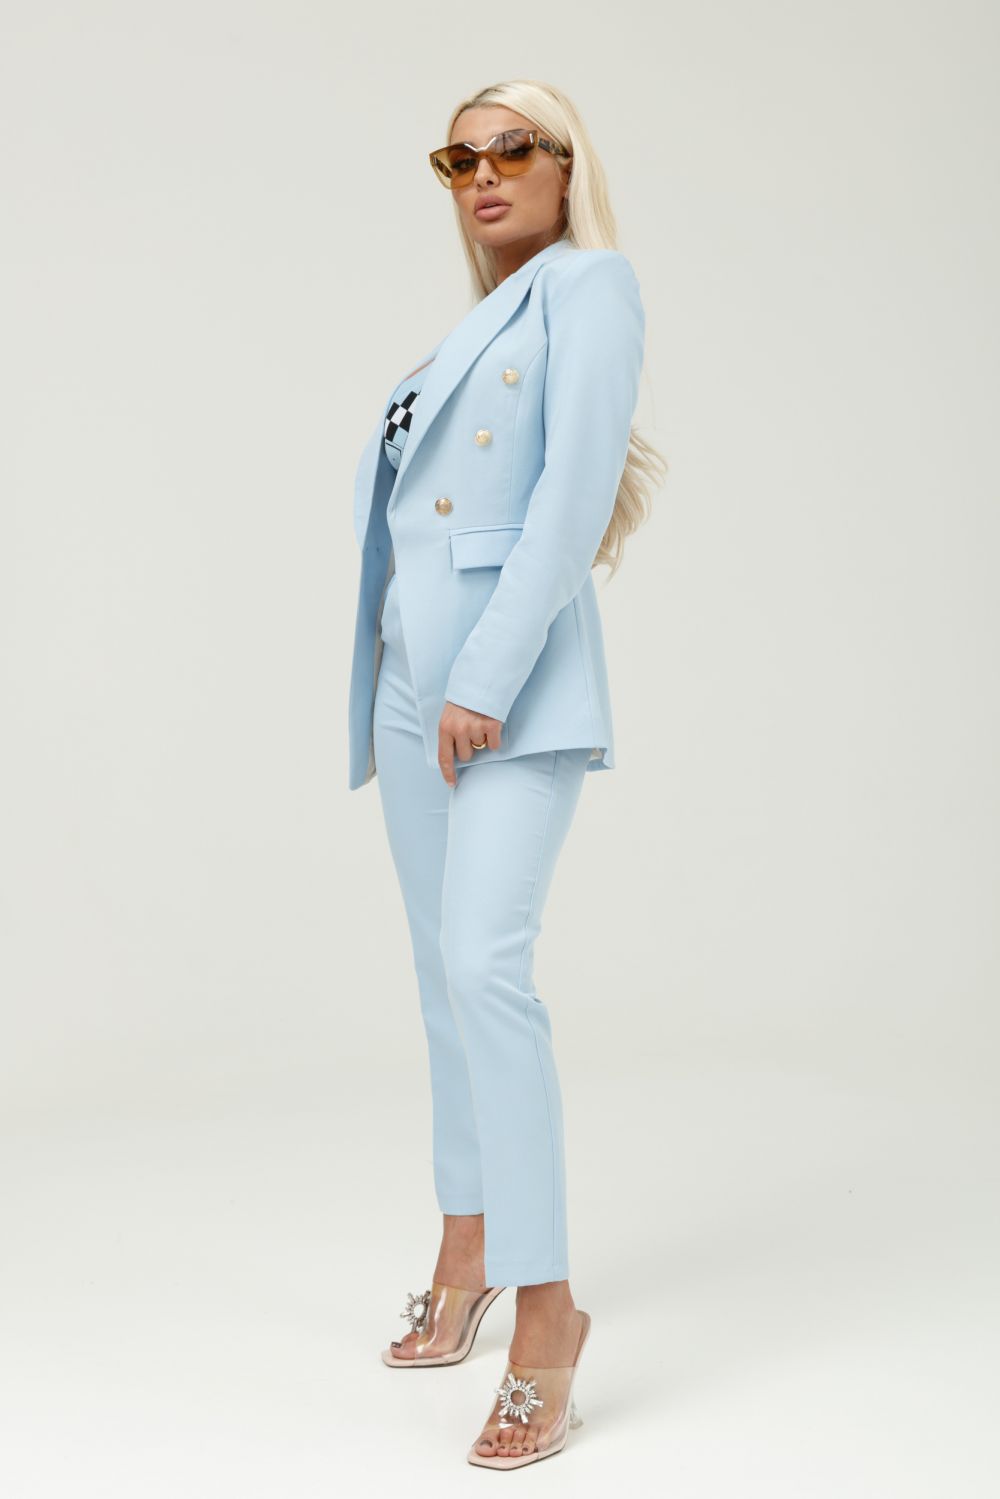 Elegant blue Iwyn Bogas ladies' suit